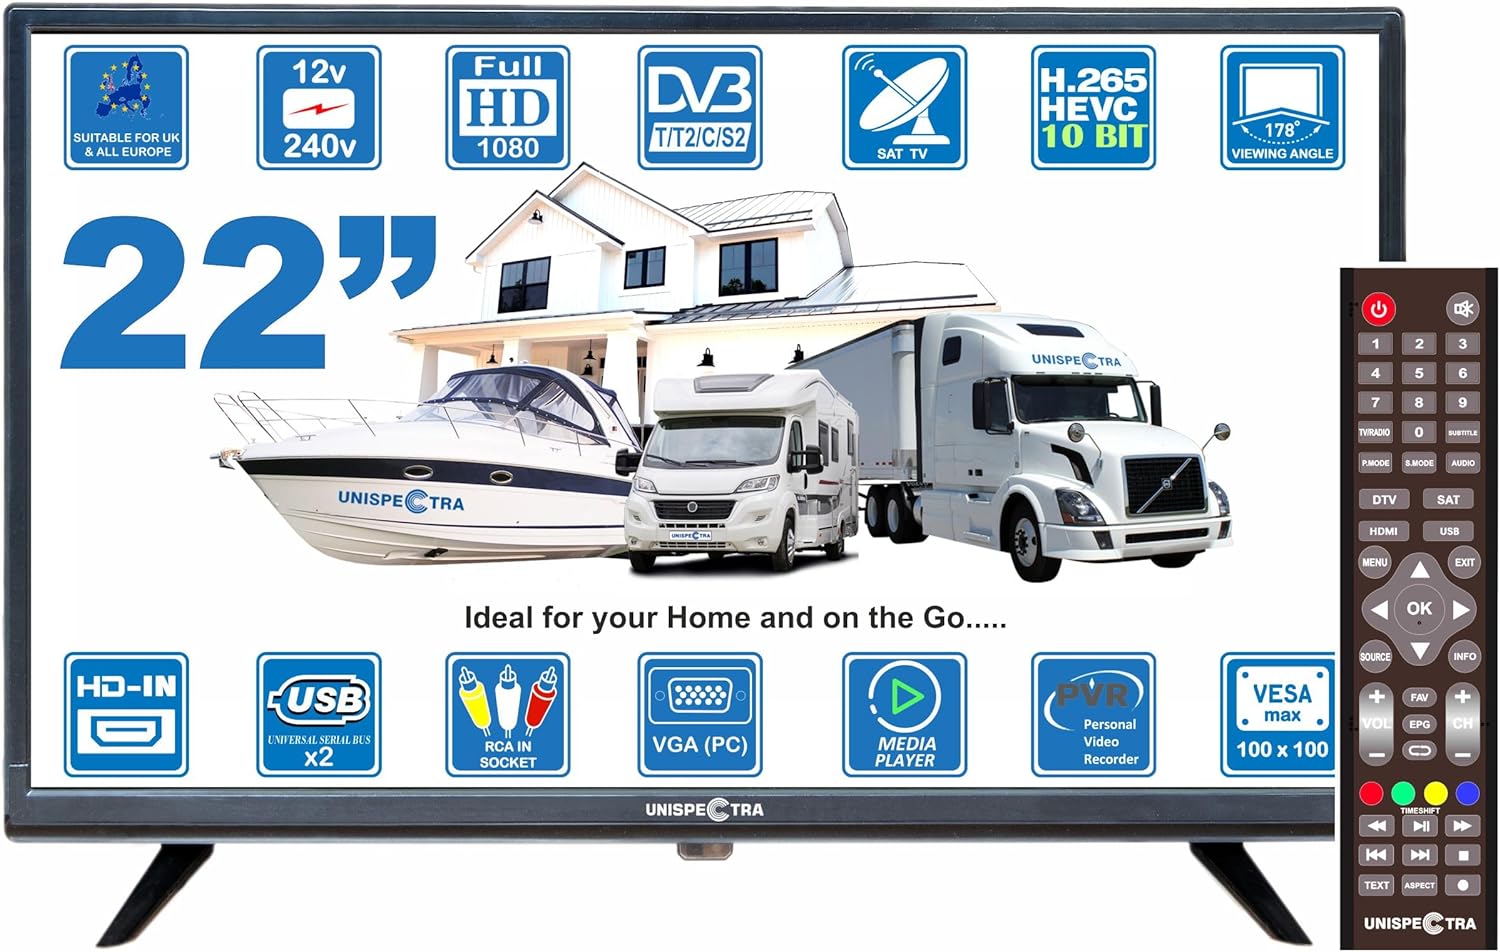 Unispectra® HD LED 240v 12v TV Freeview and SAT Tuner, USB Media Player, HDMI. 12V TVs for Motorhomes, Campervan, Caravan TV, Camping, Truck, Boat, Kitchen, Bedroom (22” SmartReady) - Amazing Gadgets Outlet